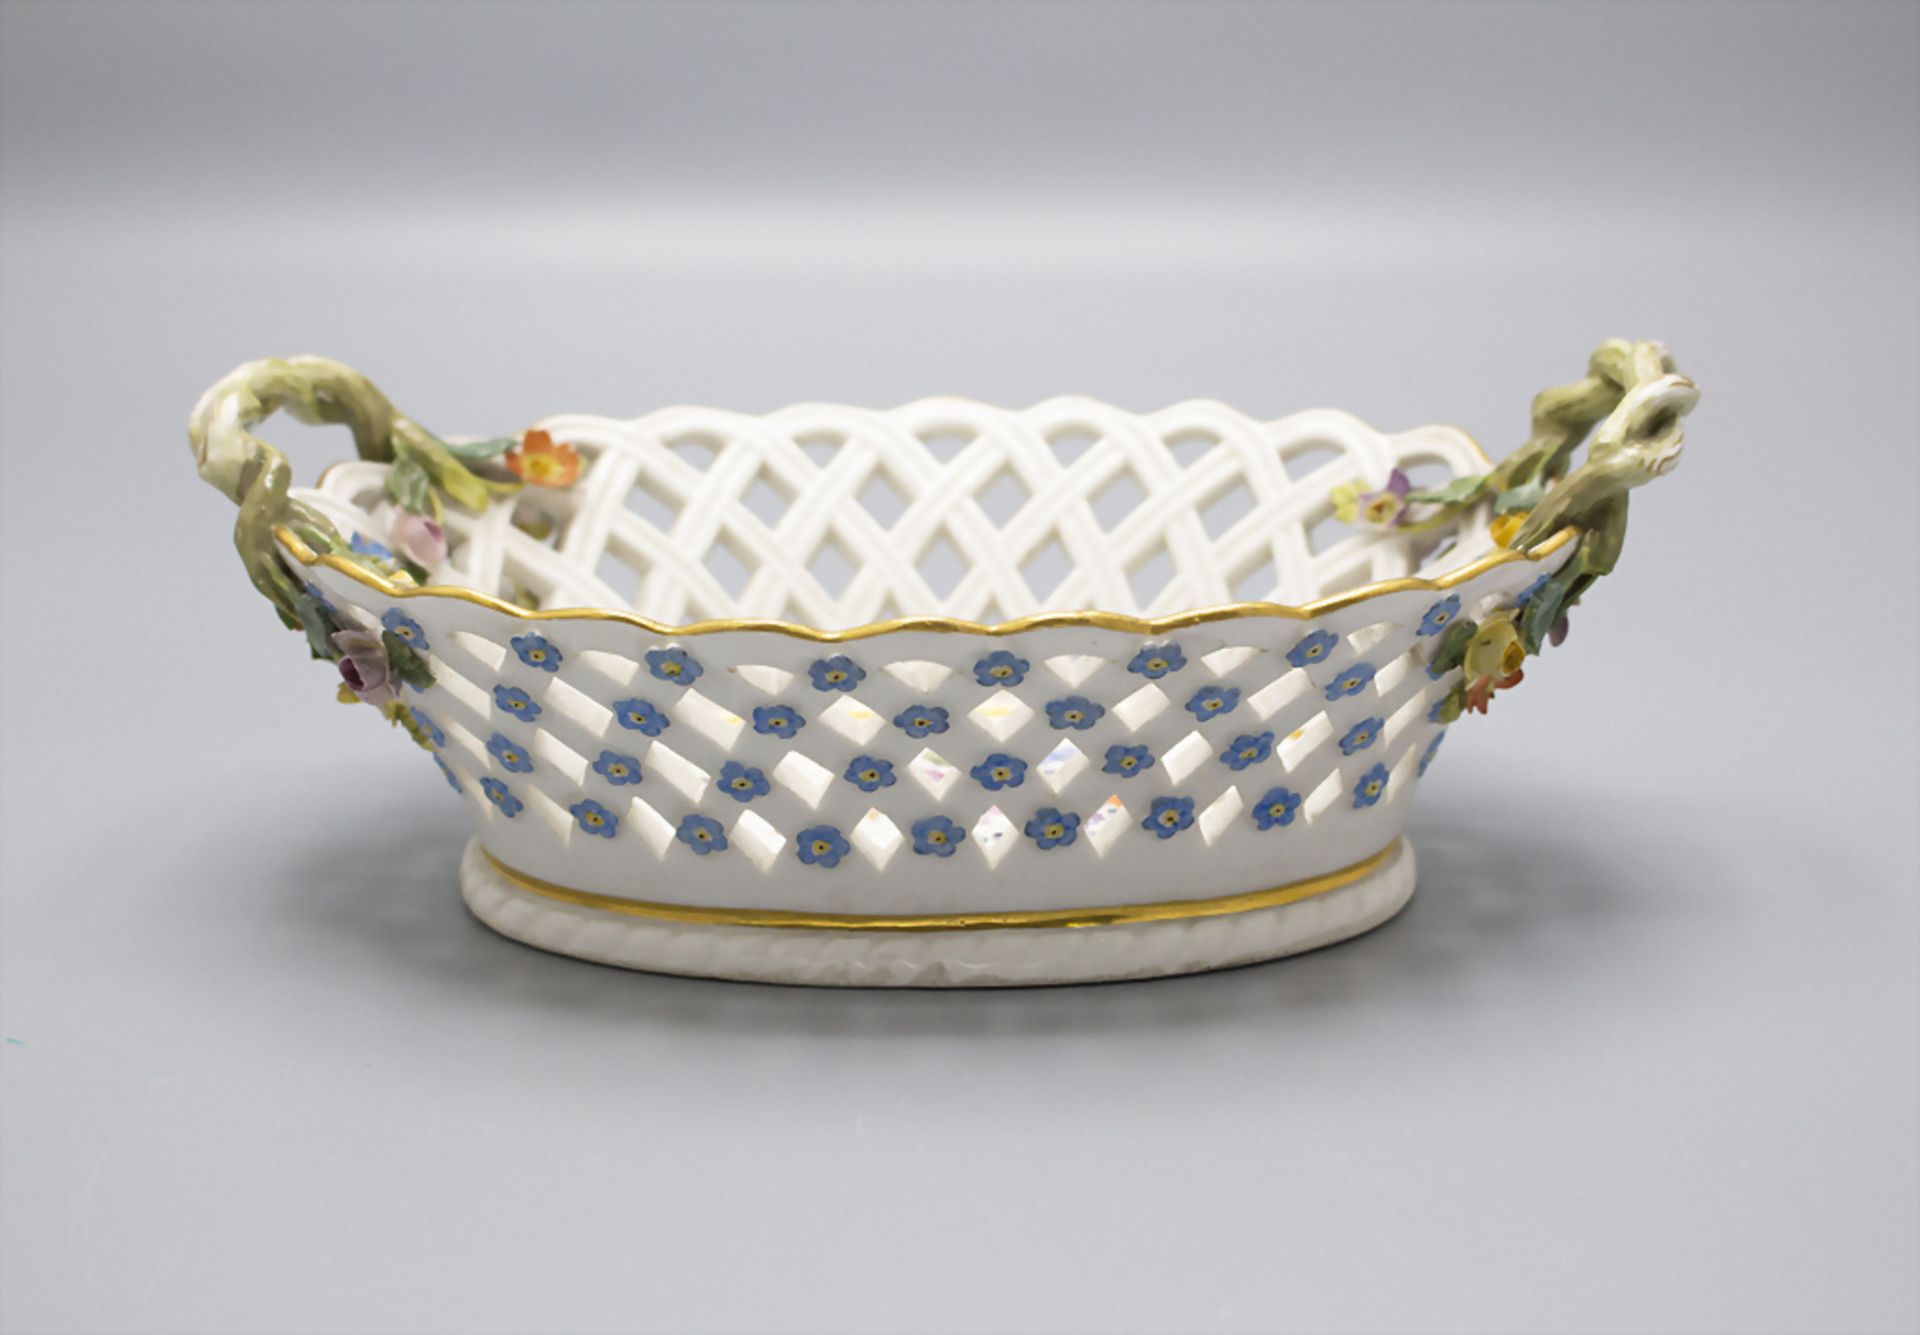 Zierschale mit aufgelegten Blüten / A decorative bowl with encrusted forget-me-not blossoms ... - Bild 3 aus 5